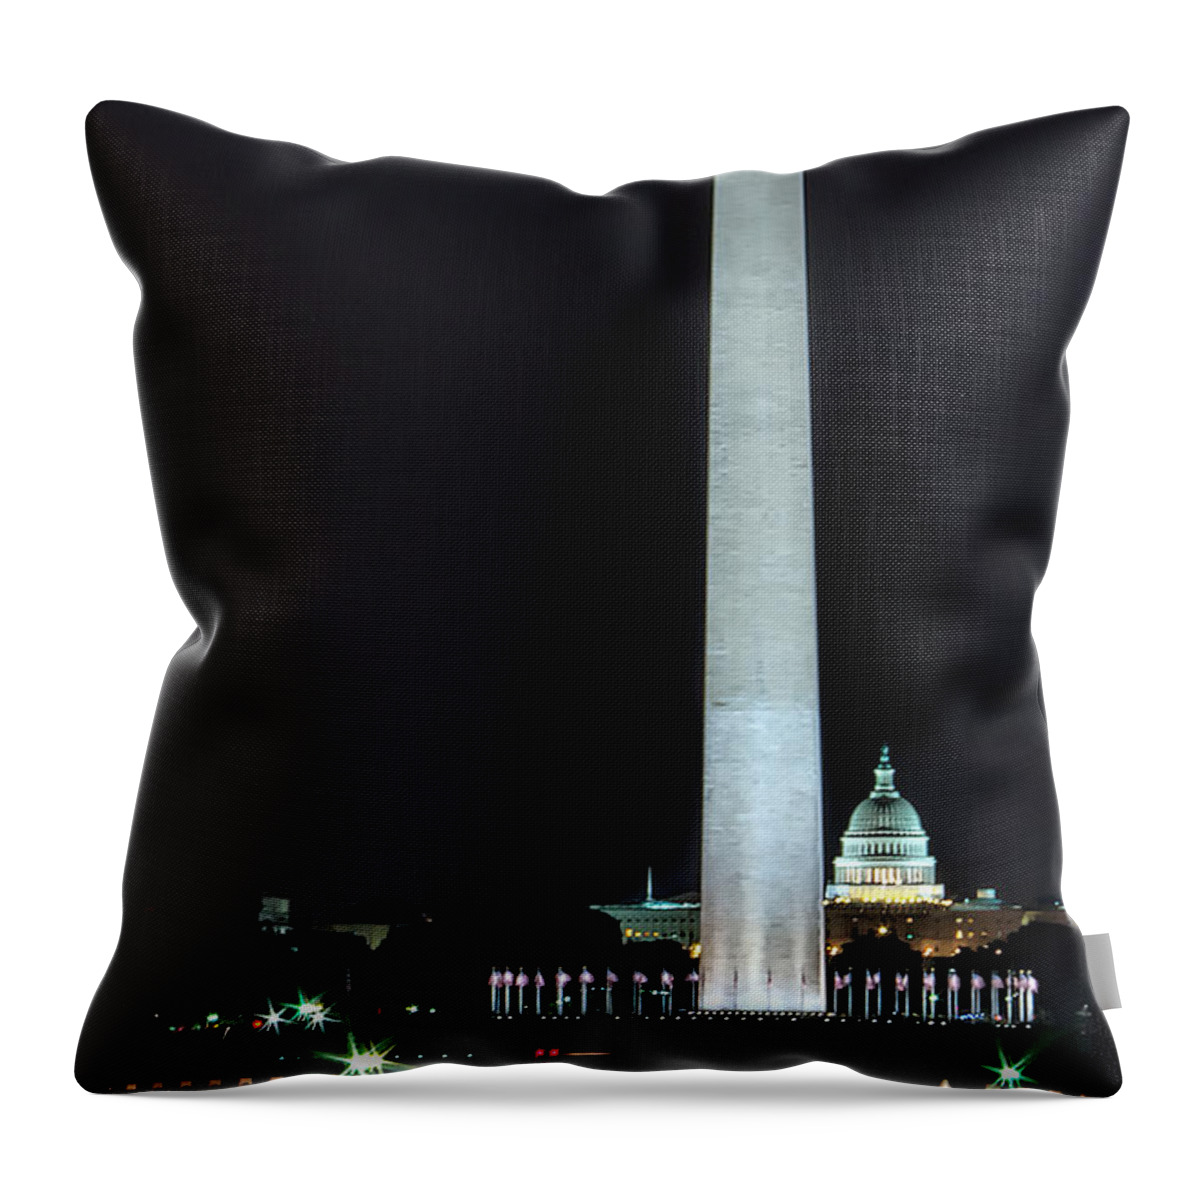 Washington Dc Throw Pillow featuring the photograph Towering Washington Monument by Izet Kapetanovic